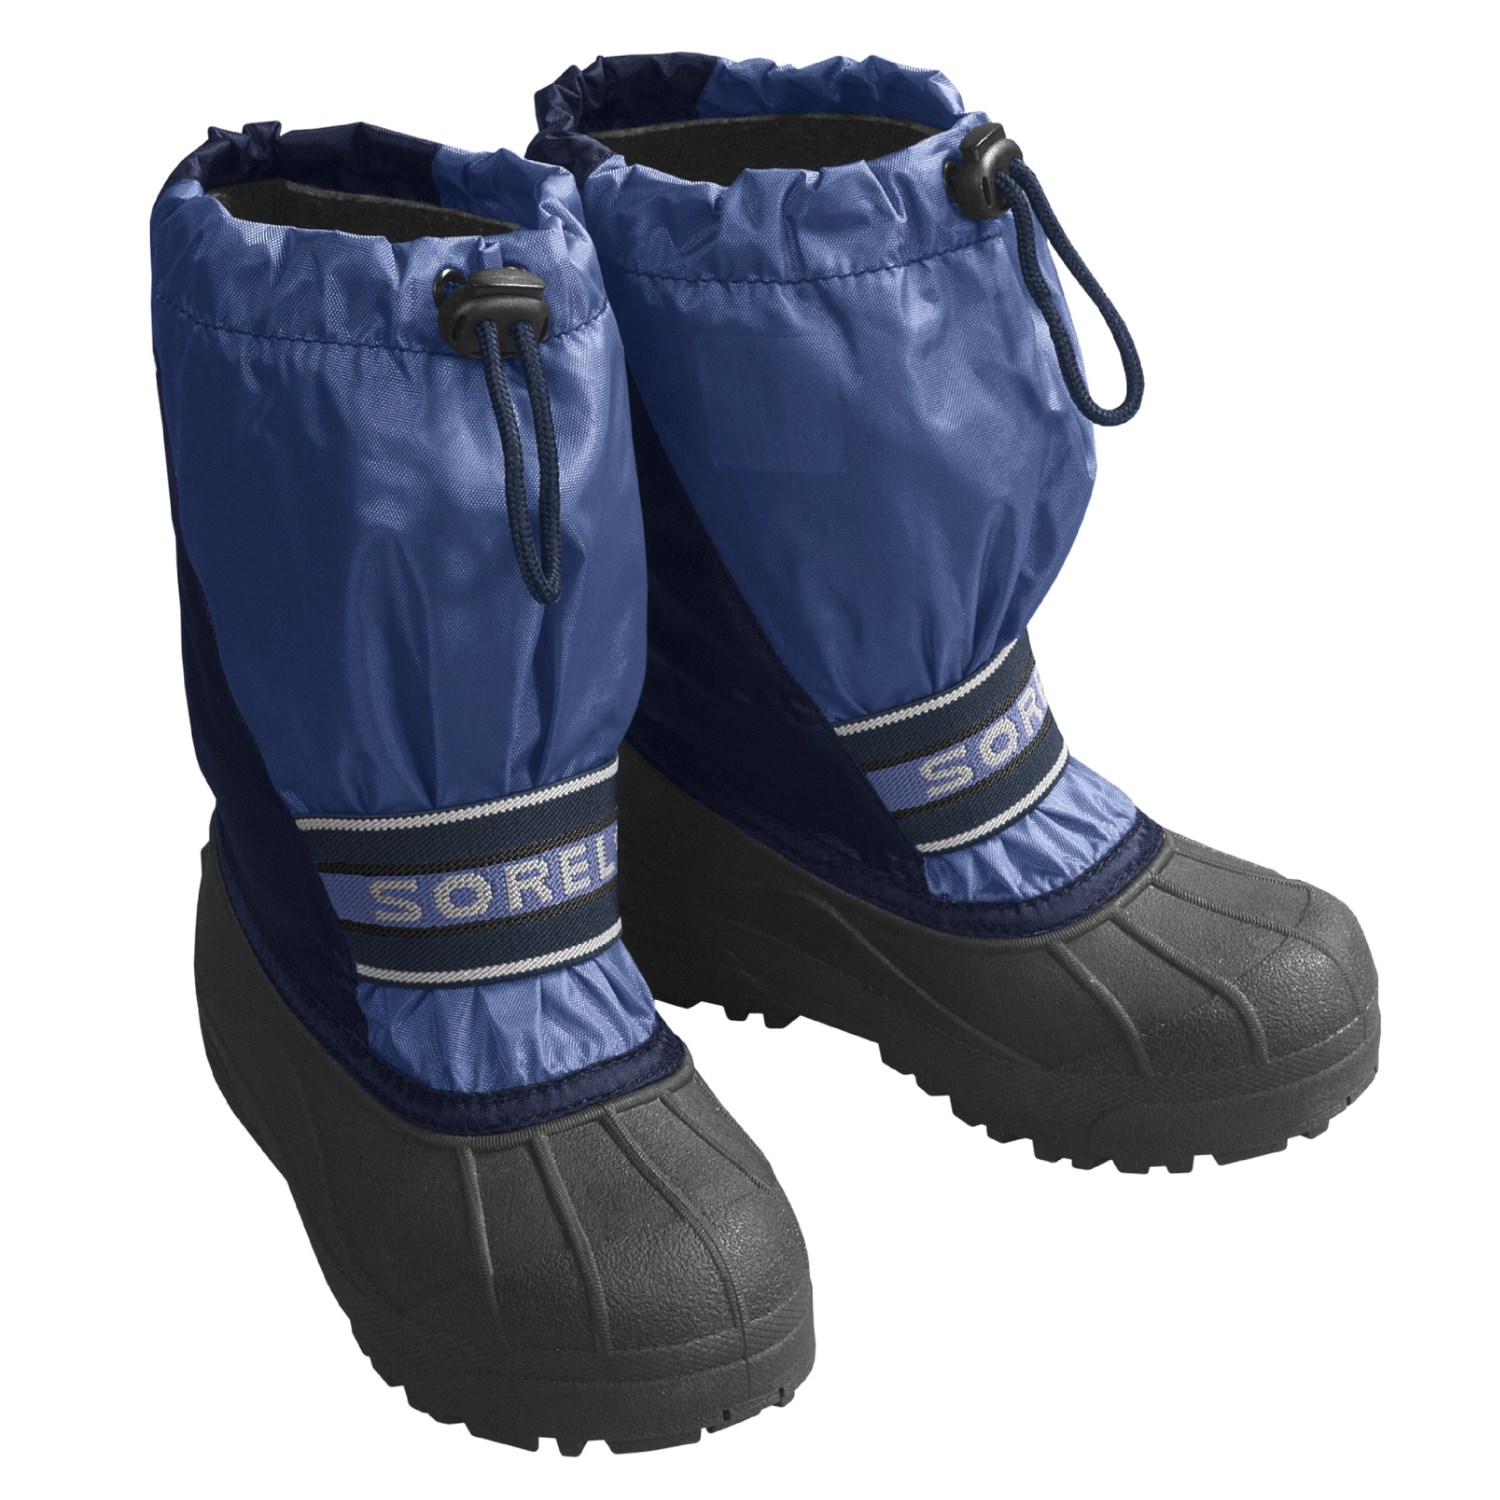 Sorel Ice Fox Winter Boots (For Kids) 72838